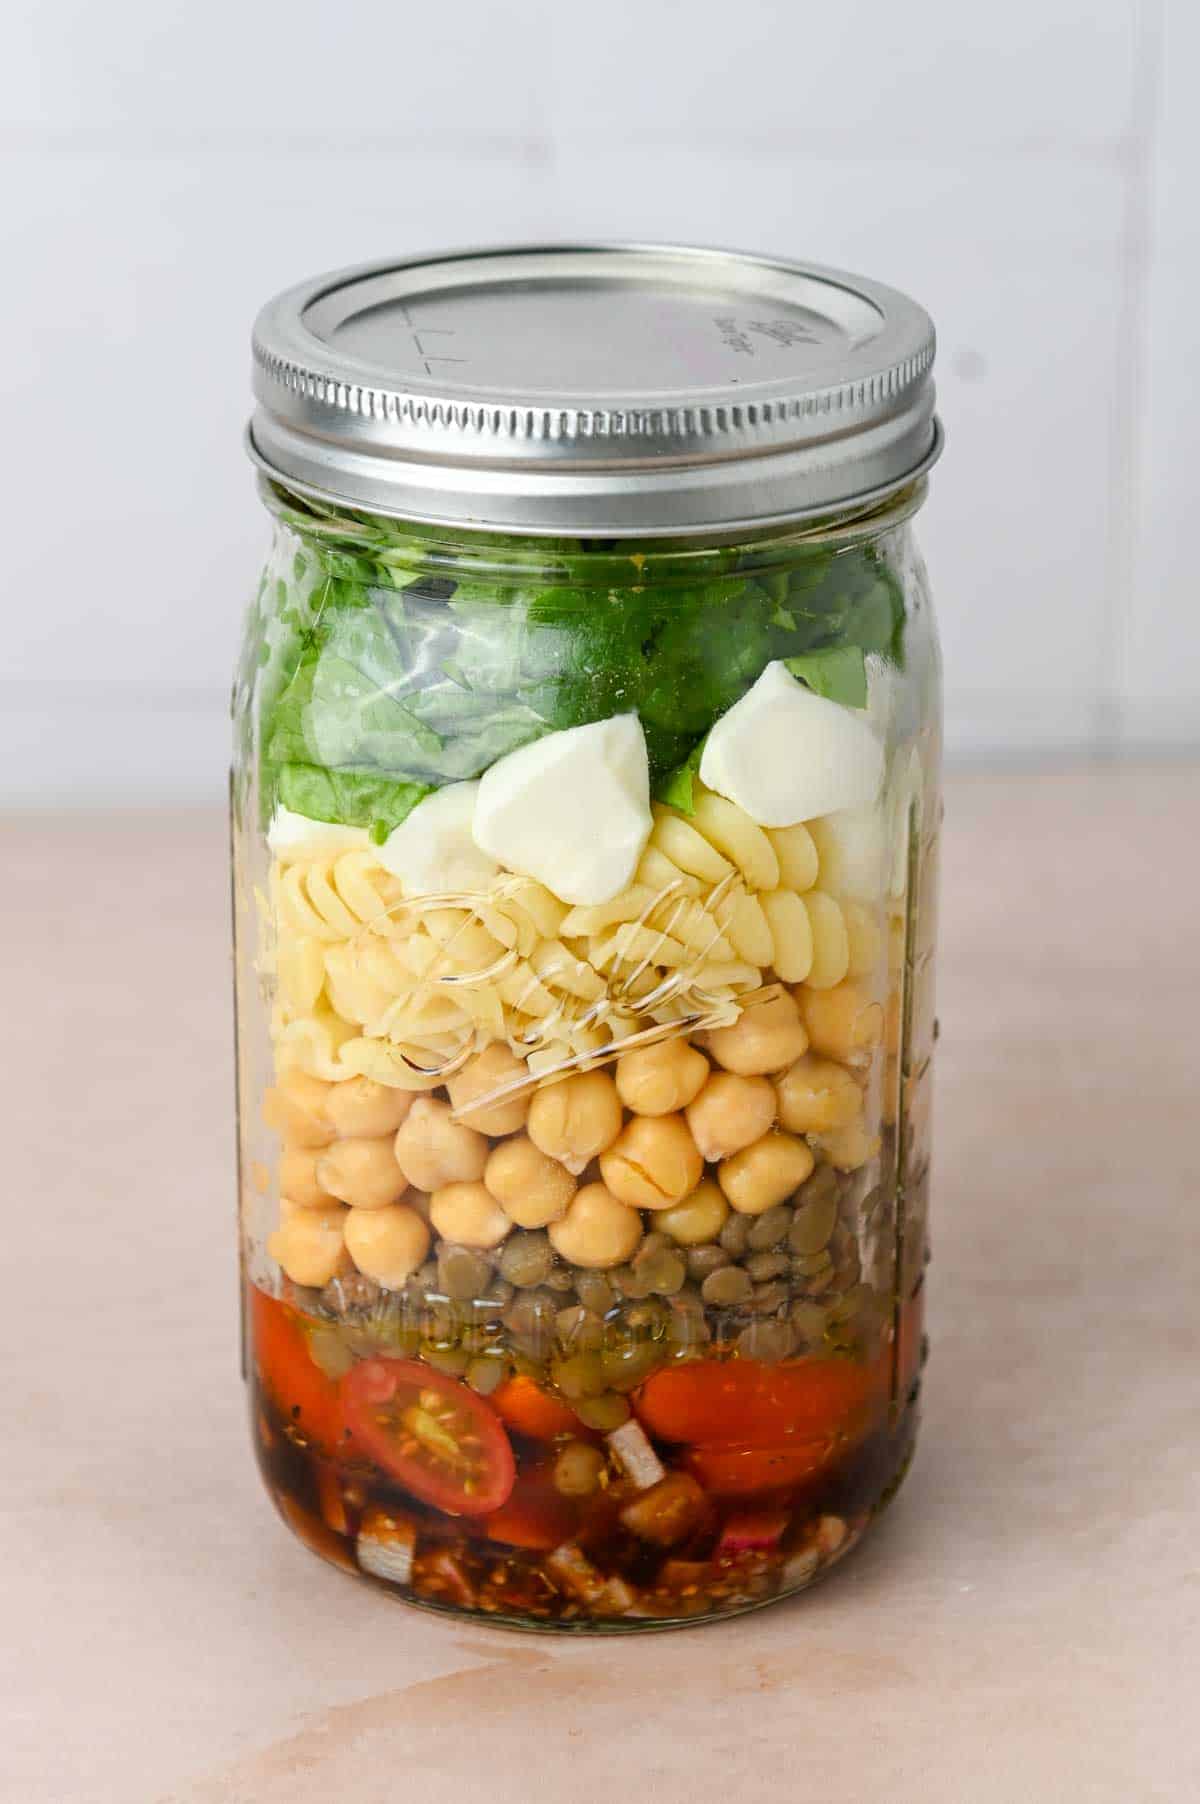 Quart sized mason jar filled with salad ingredients.